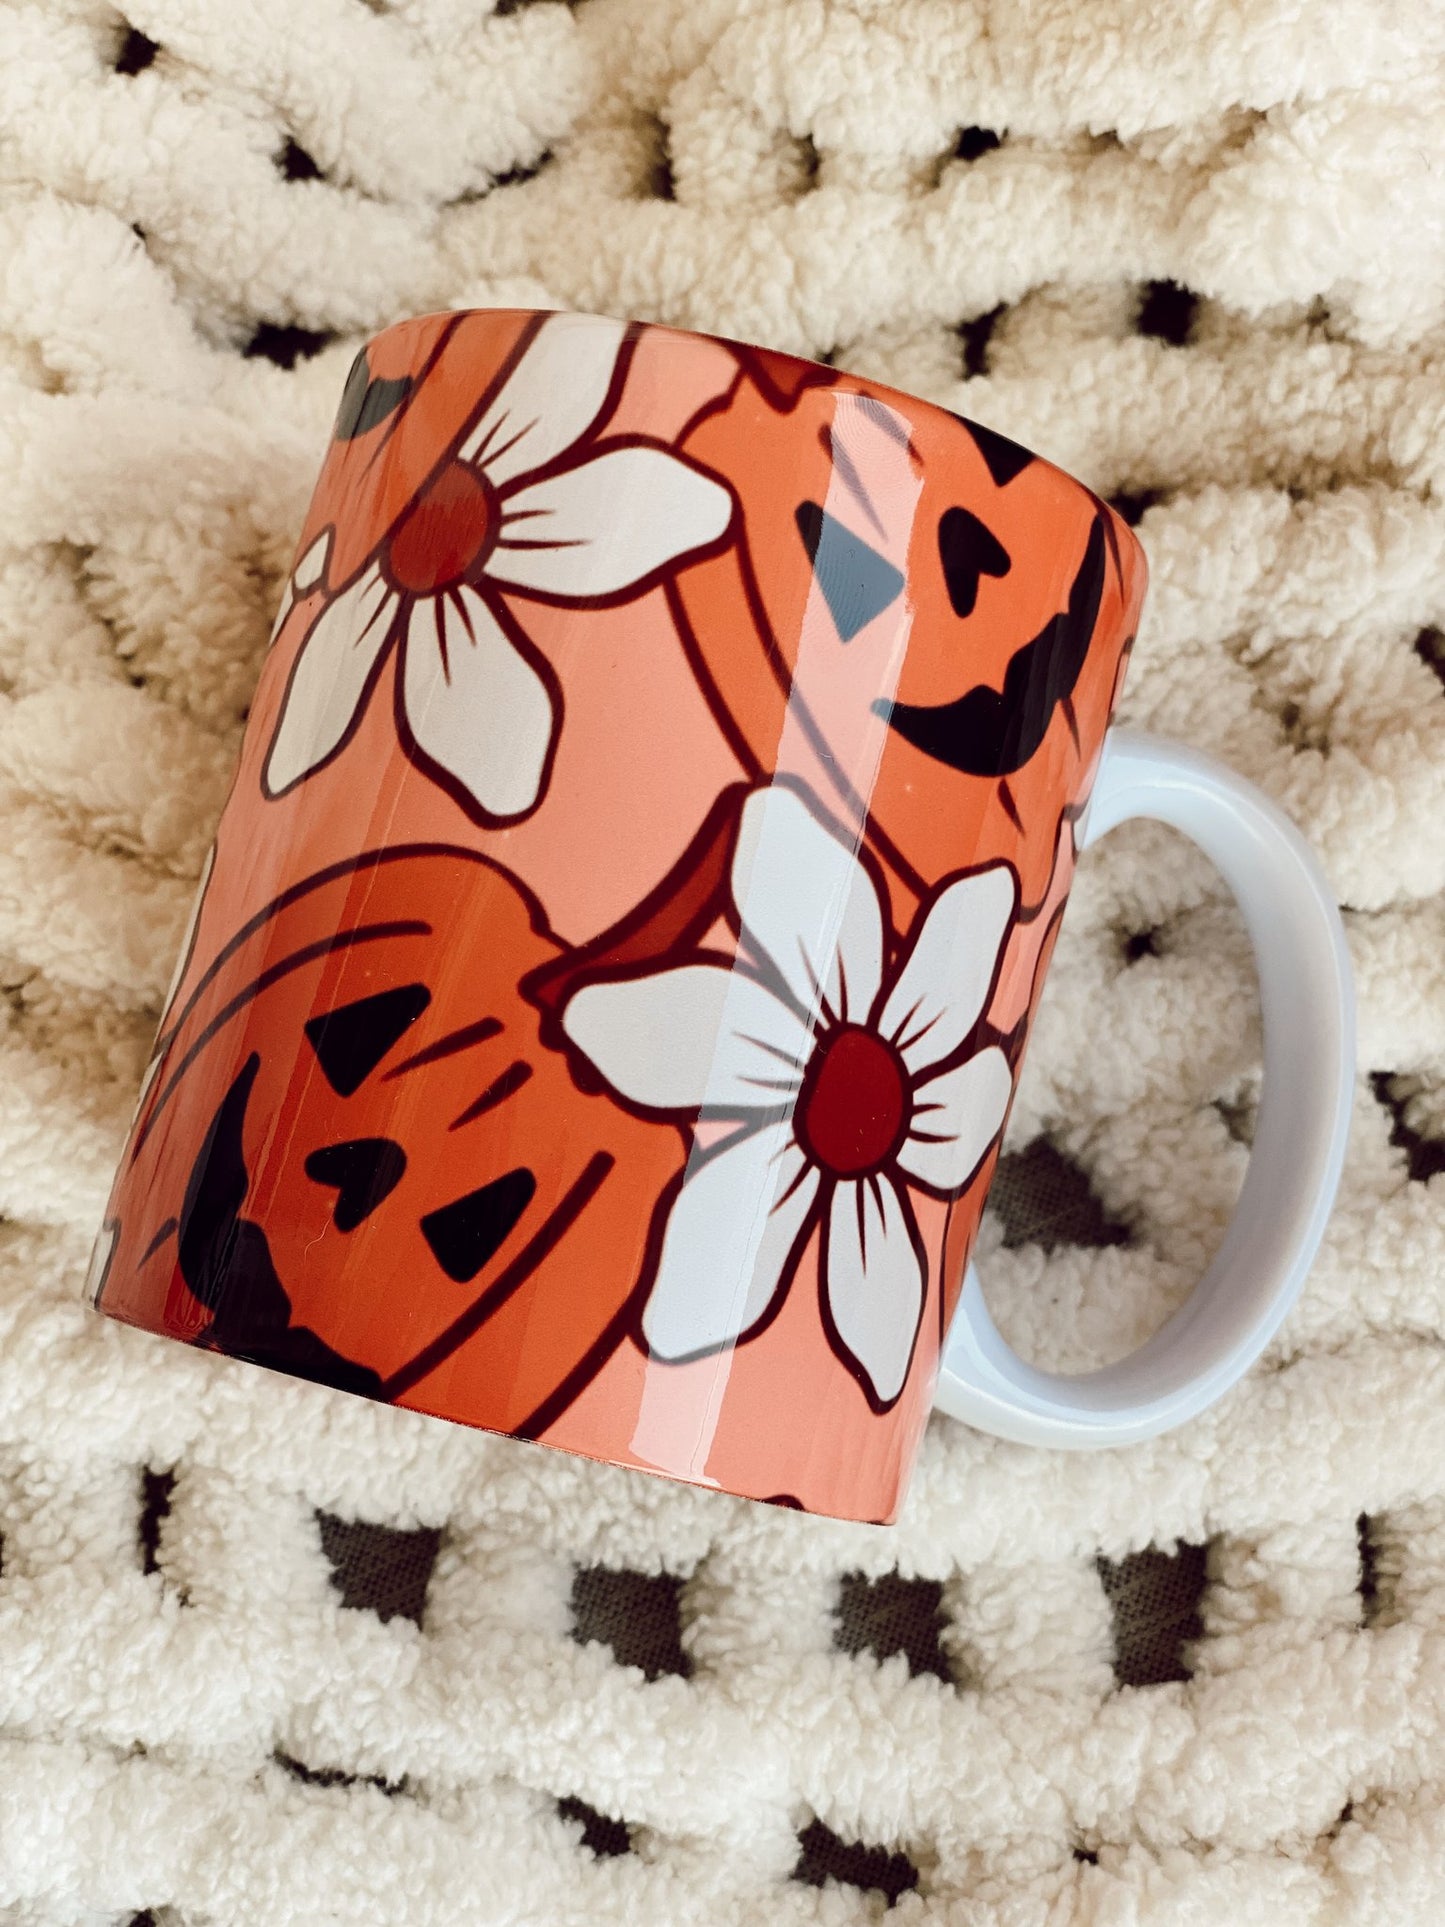 Groovy Pumpkin Mug